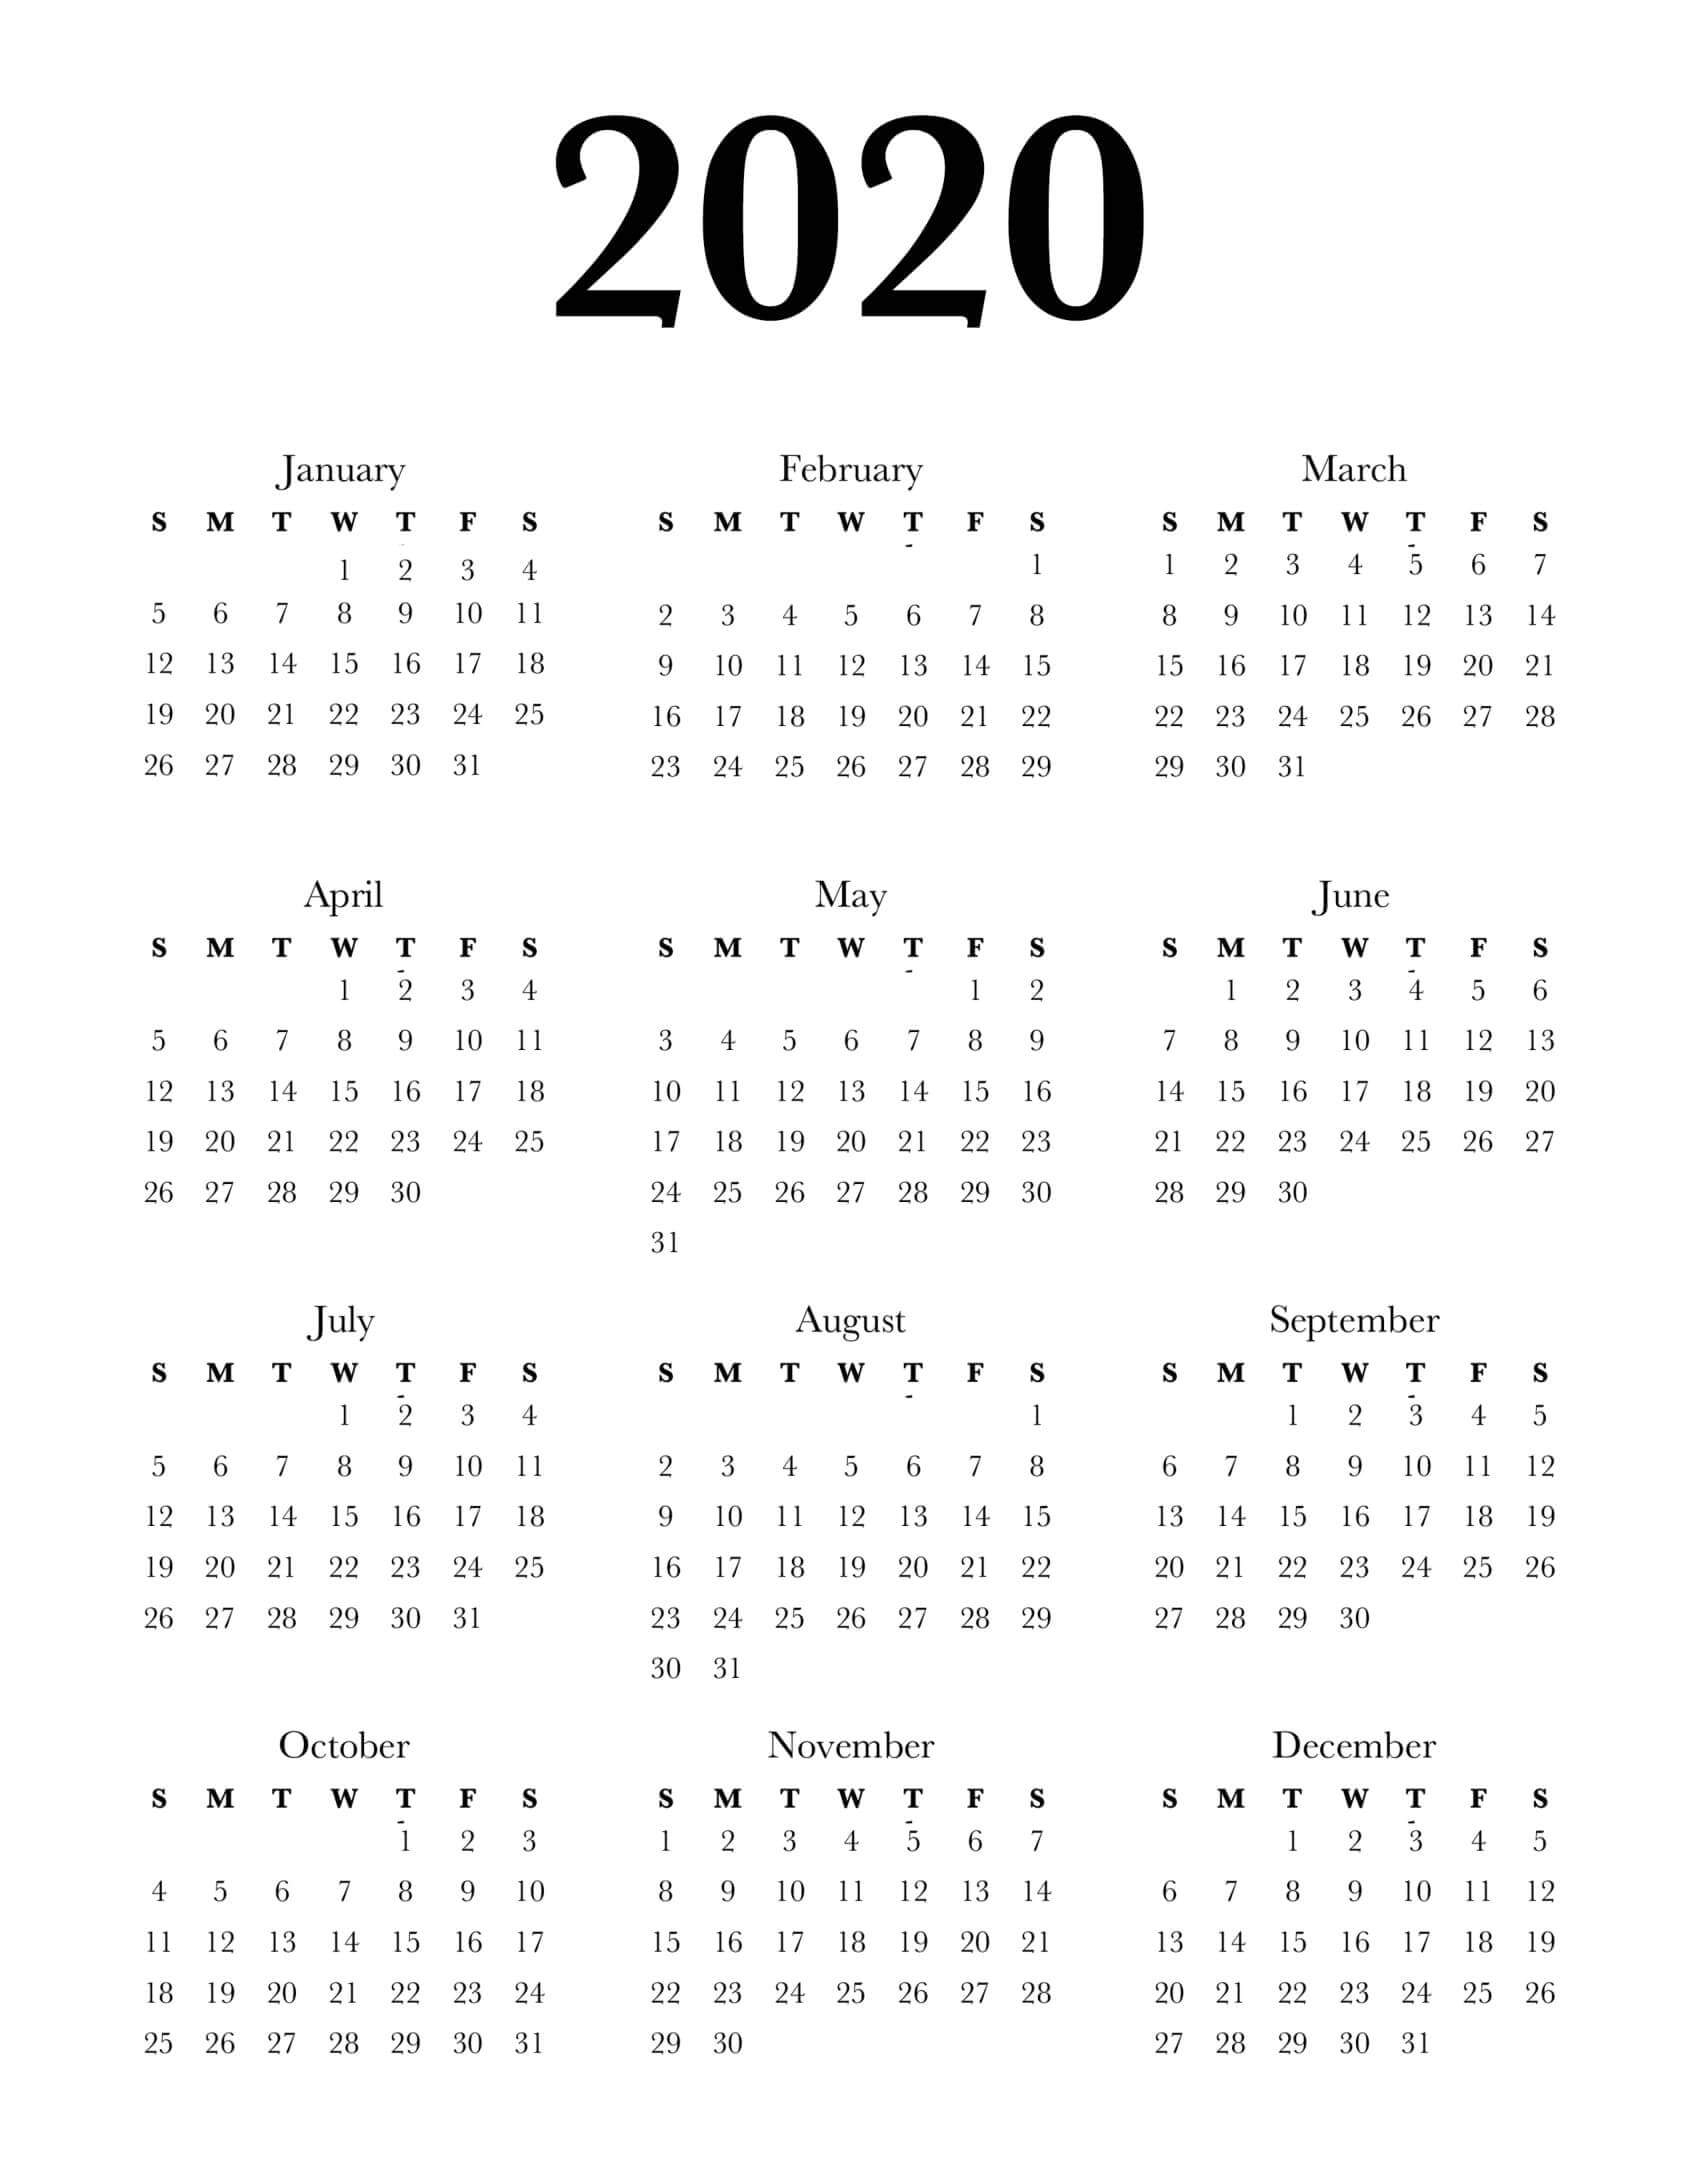 Calendar Year 2020 Holidays Template - 2019 Calendars For